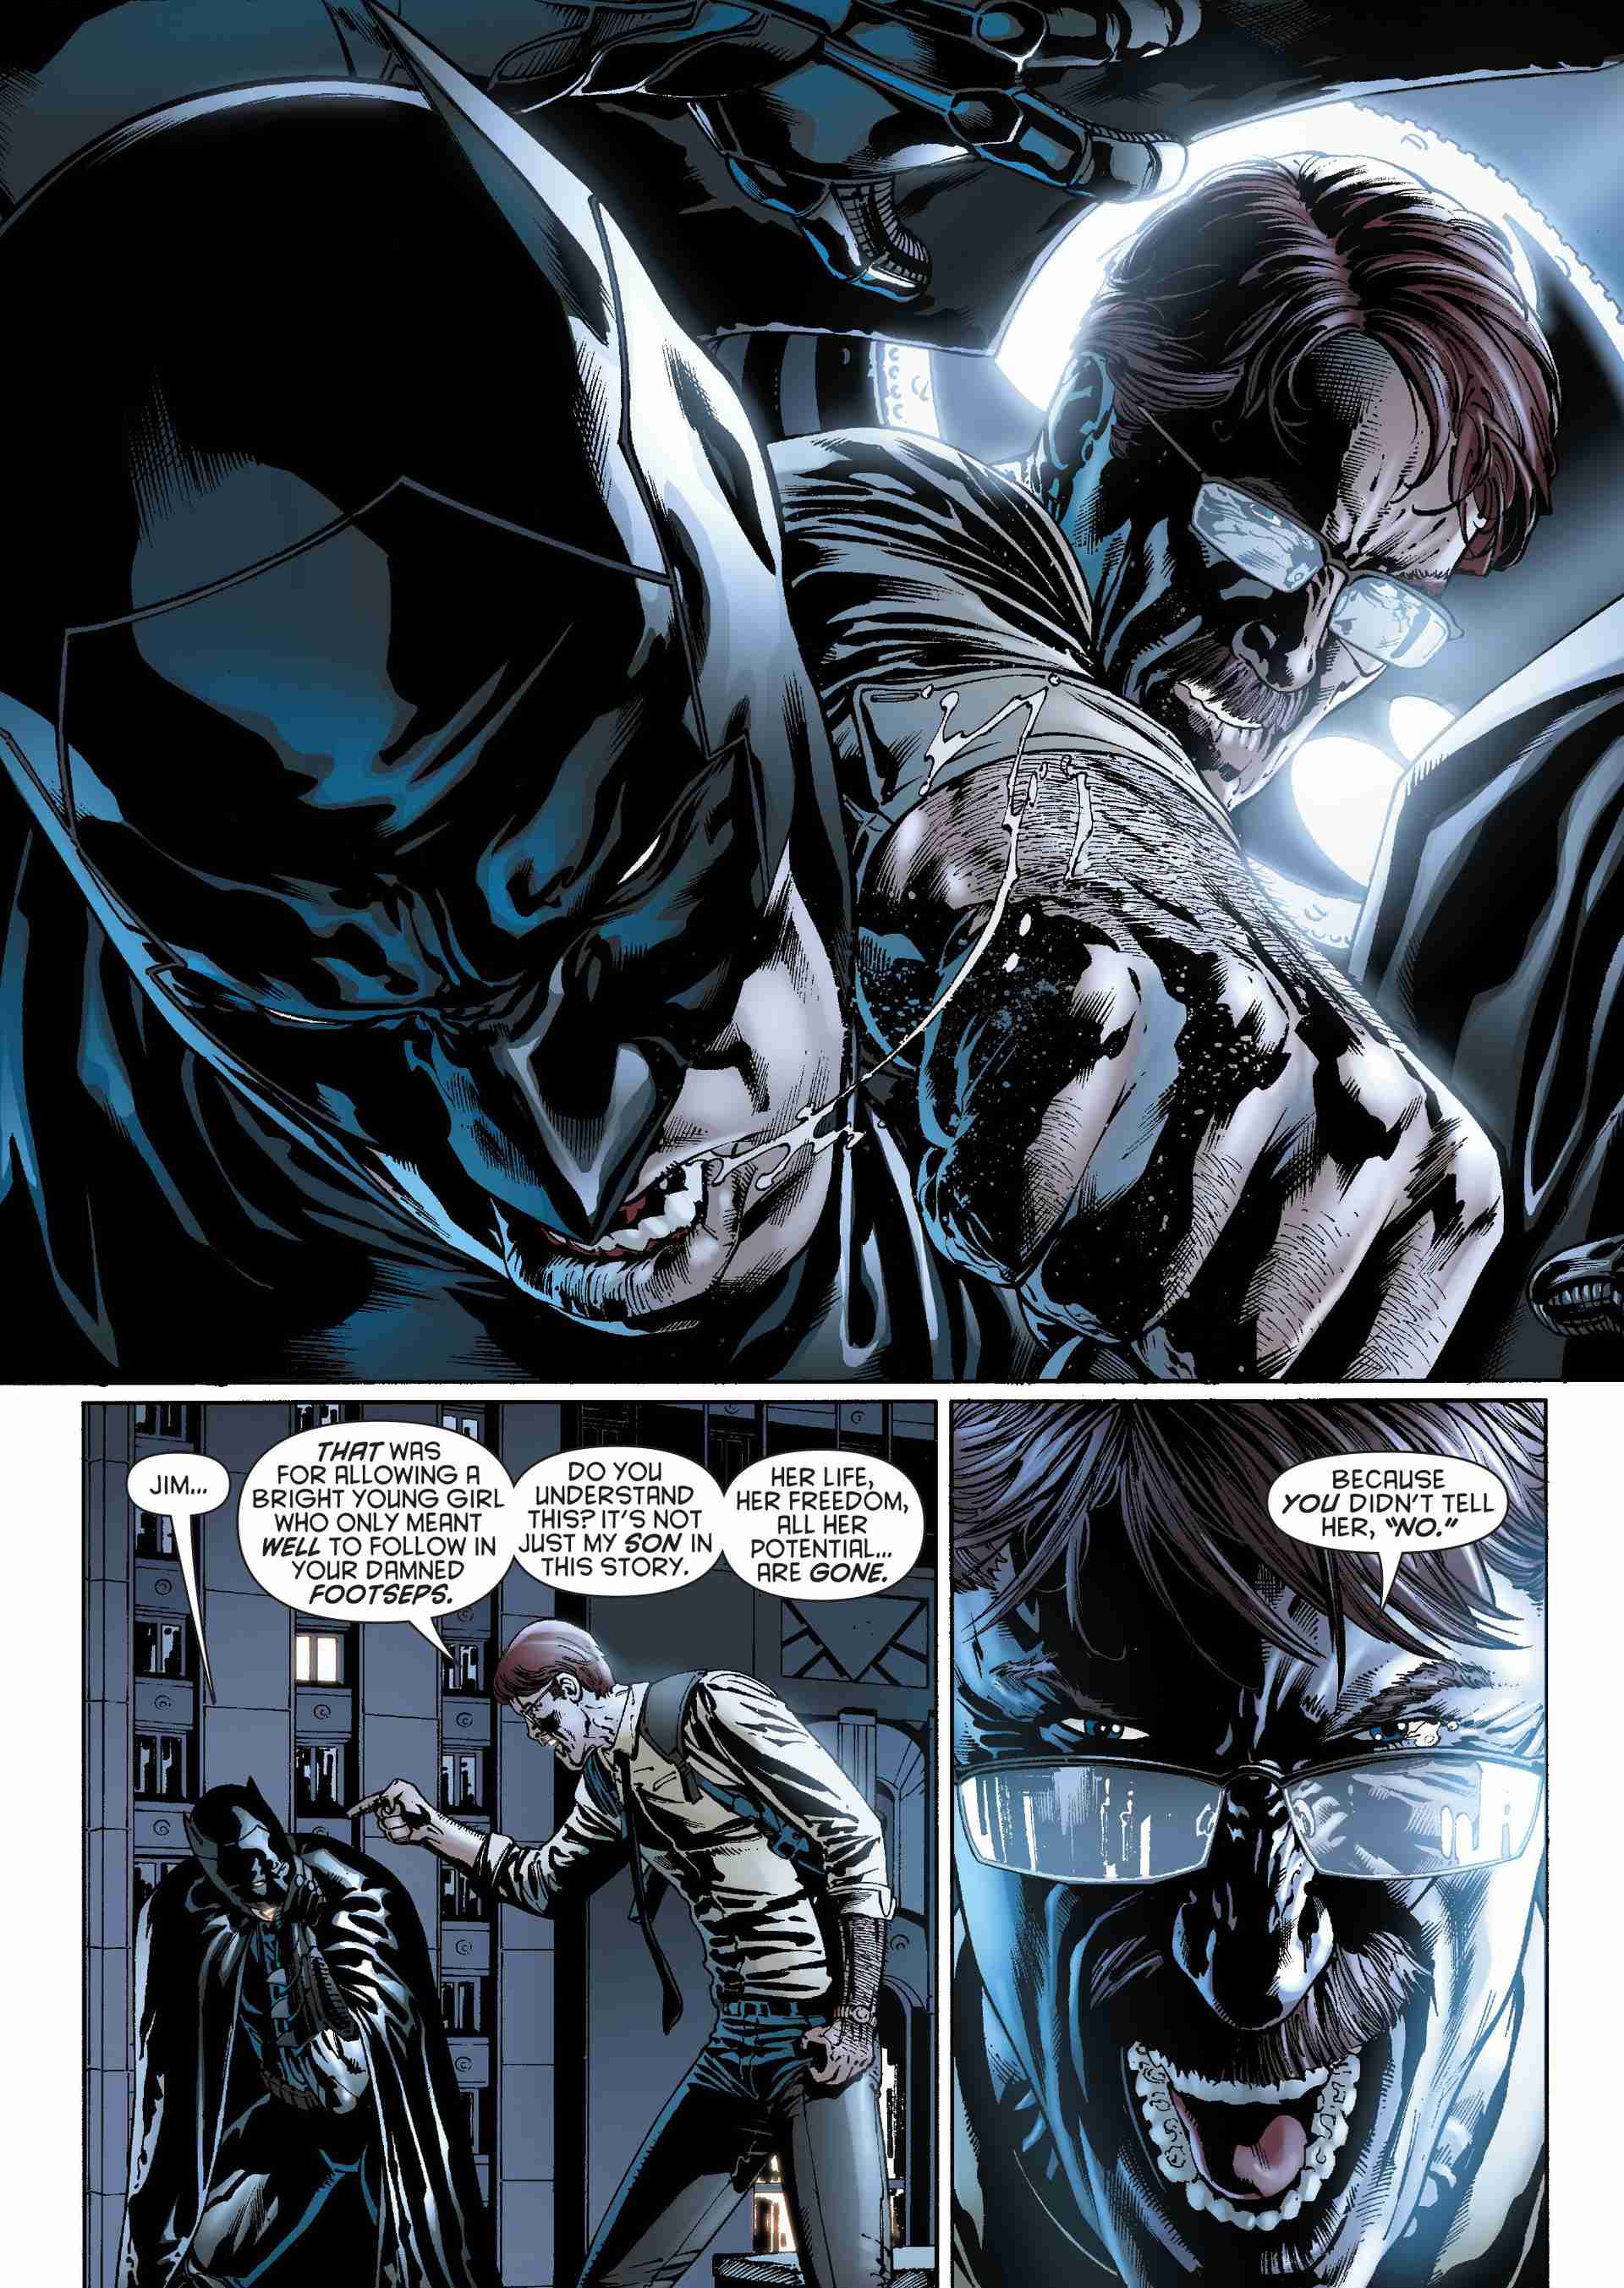 Jim Gordon vs Batman by Elessar07 on DeviantArt